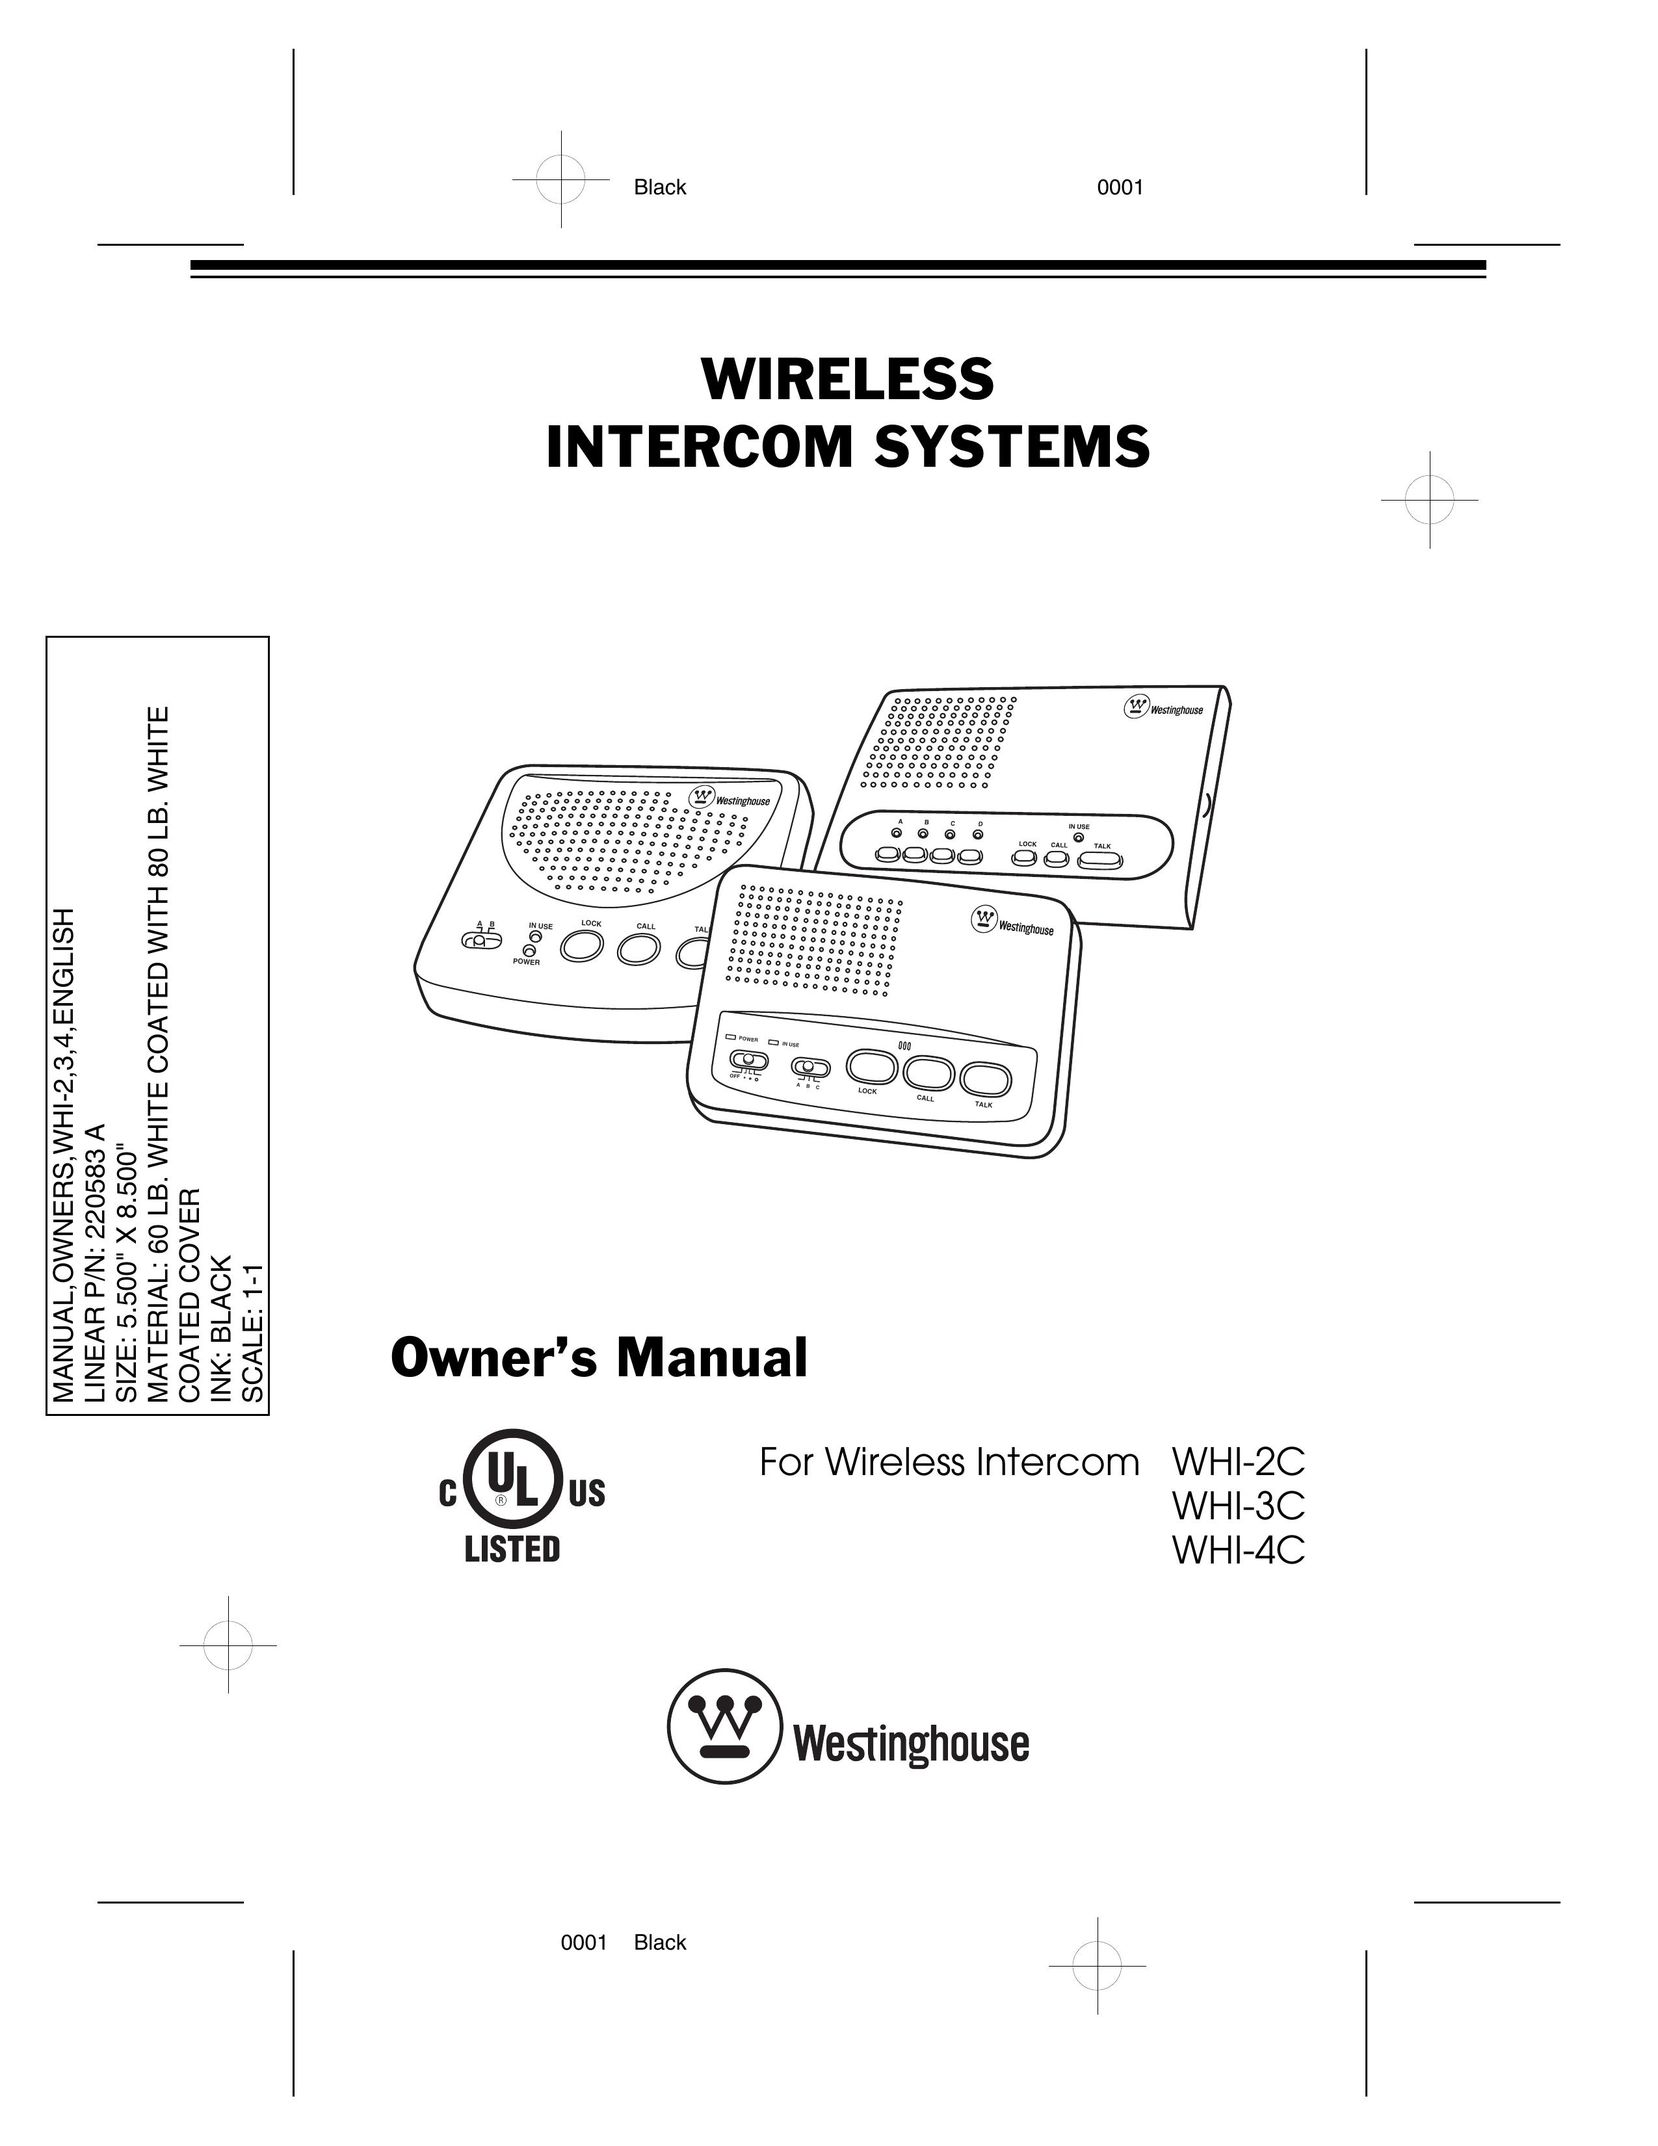 Westinghouse WHI-4C Intercom System User Manual